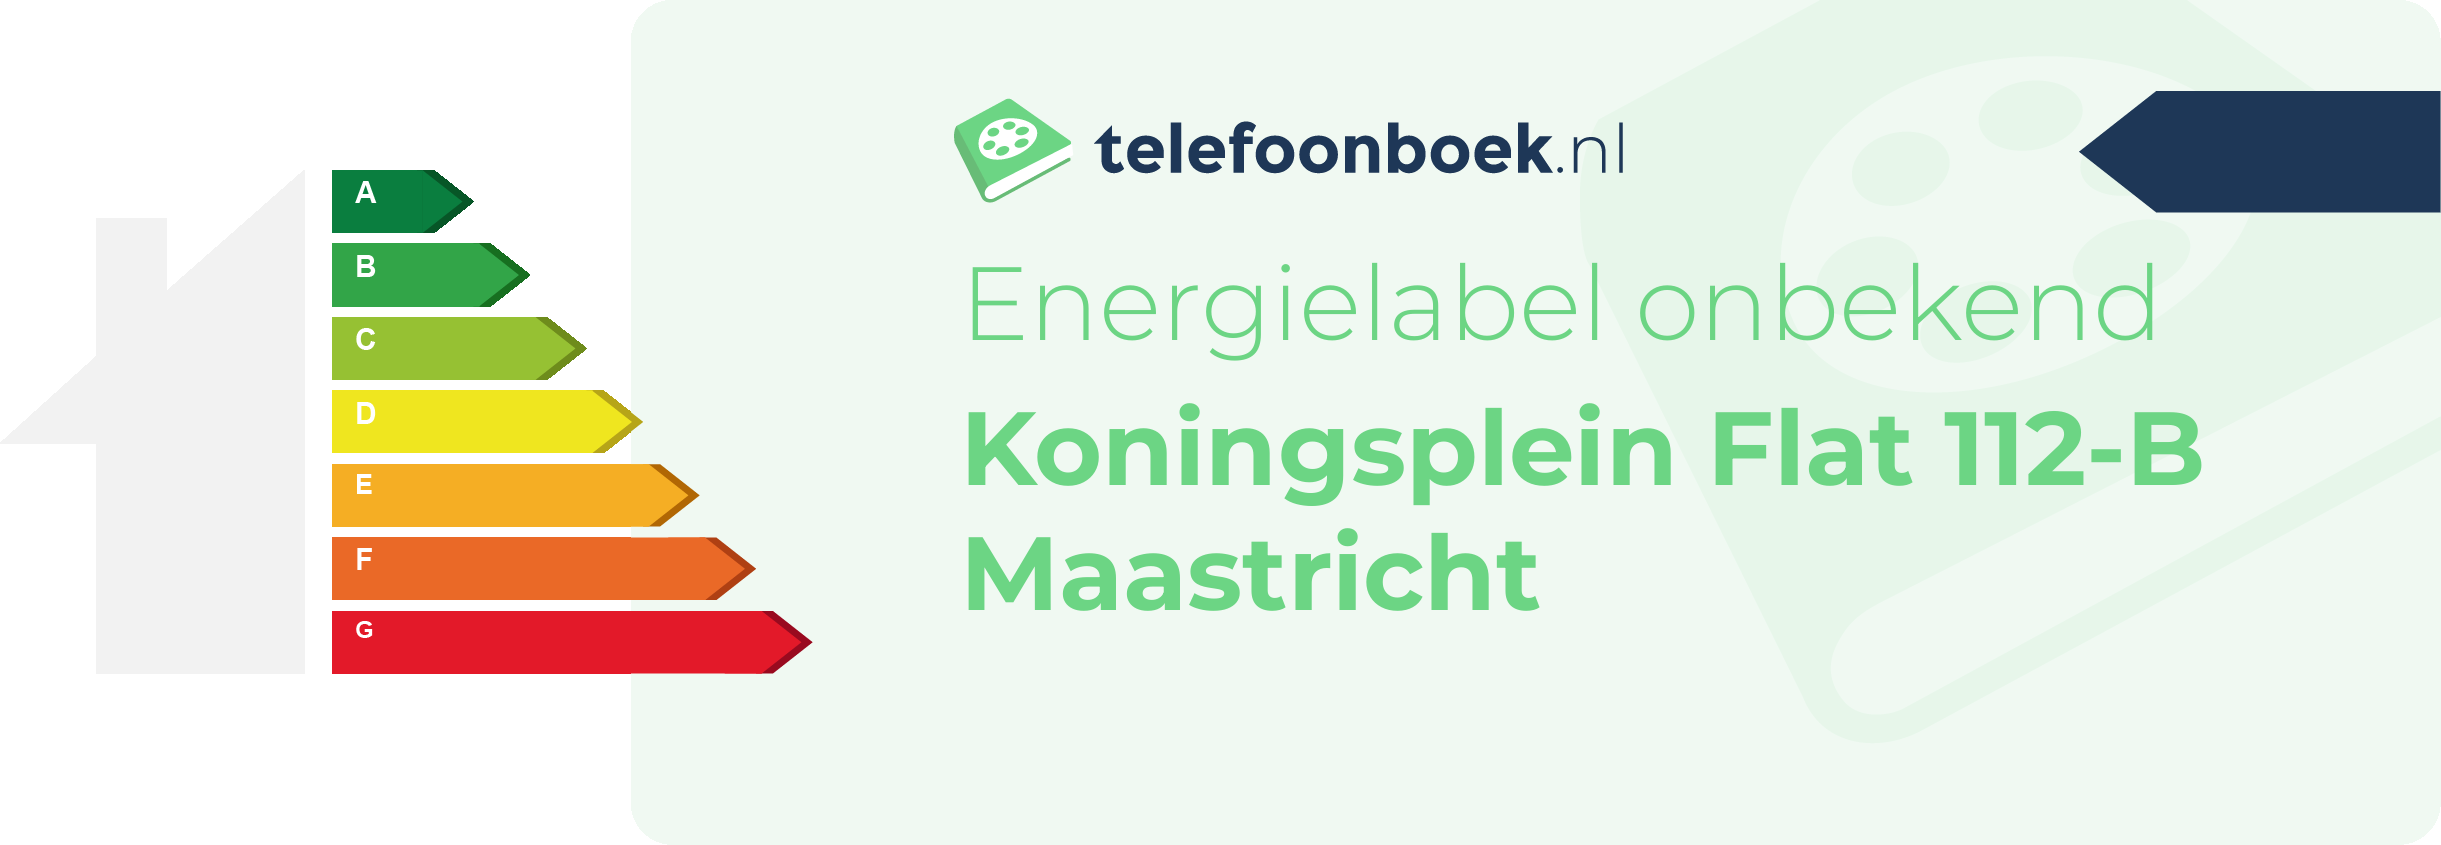 Energielabel Koningsplein Flat 112-B Maastricht